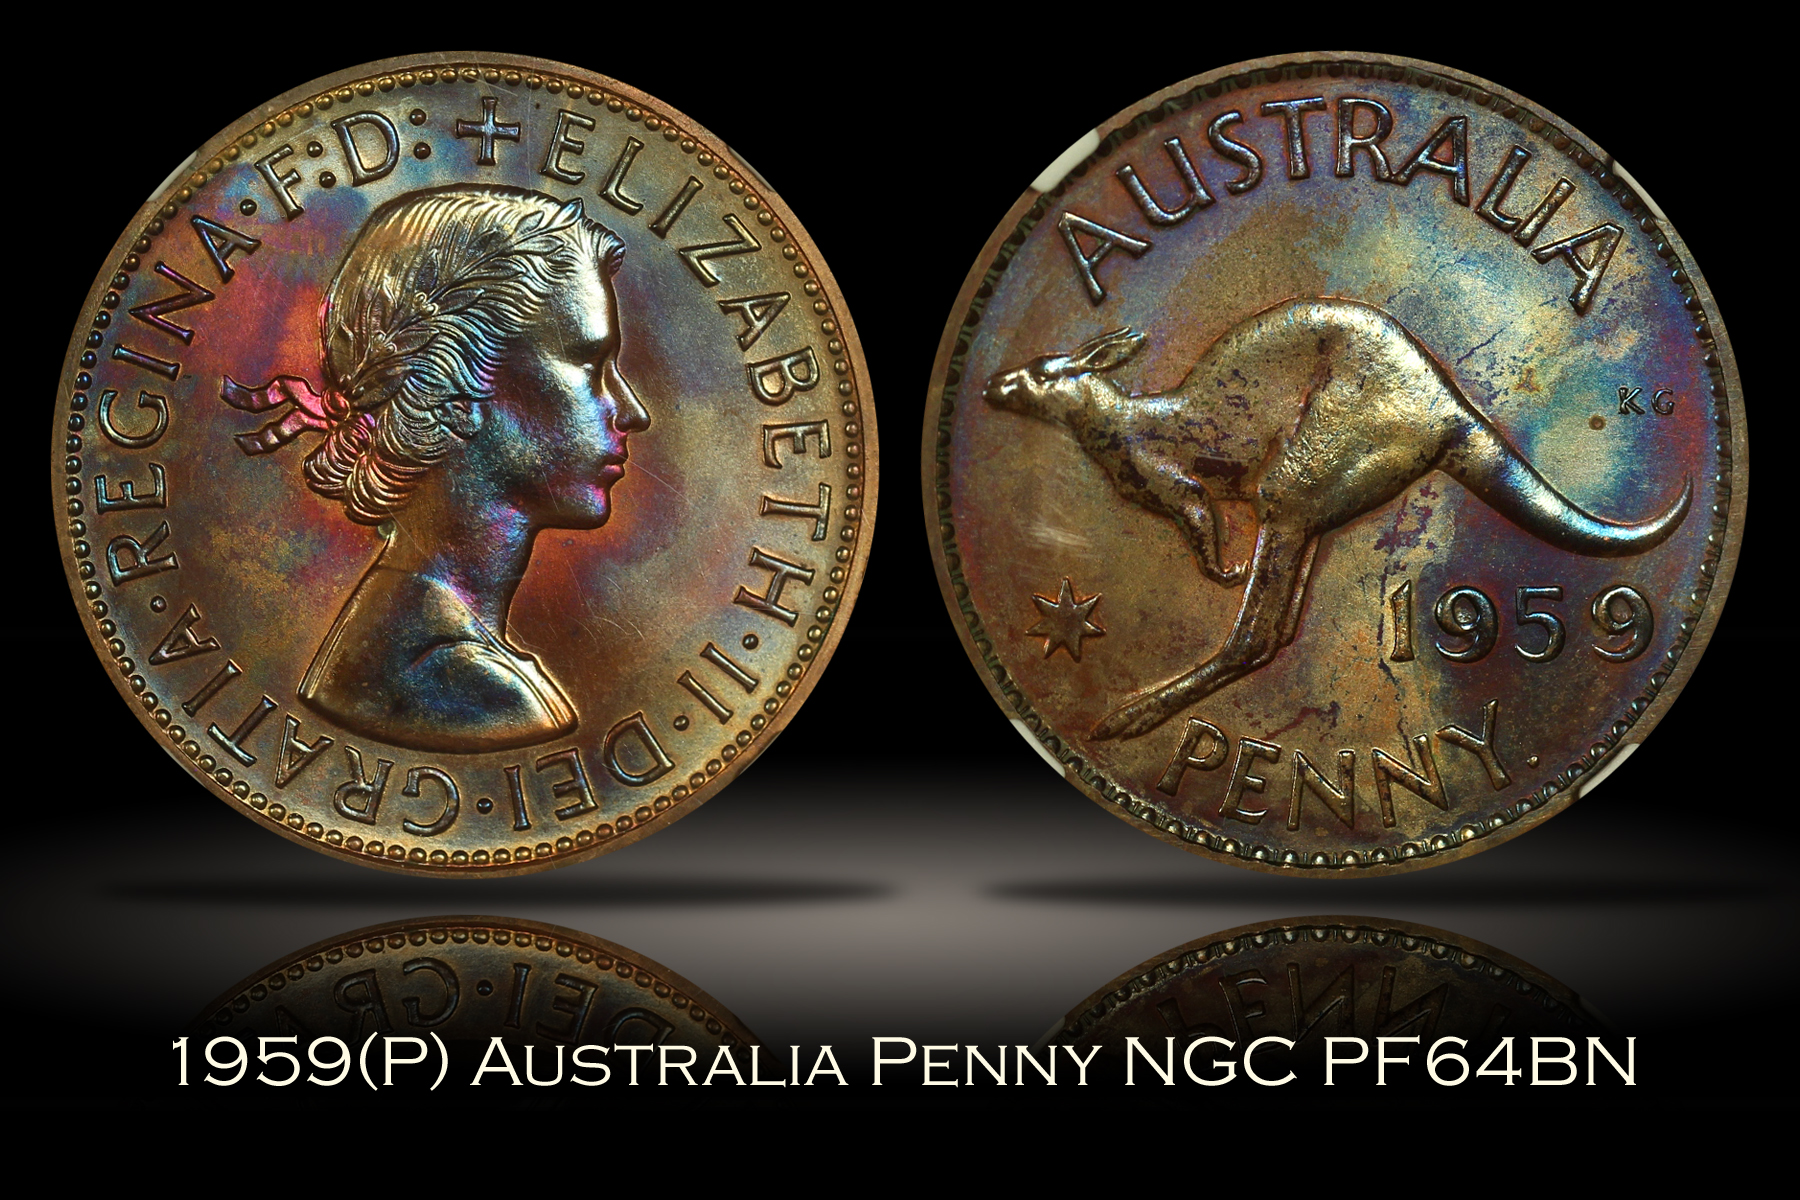 1959(P) Australia Proof Penny NGC PF64BN